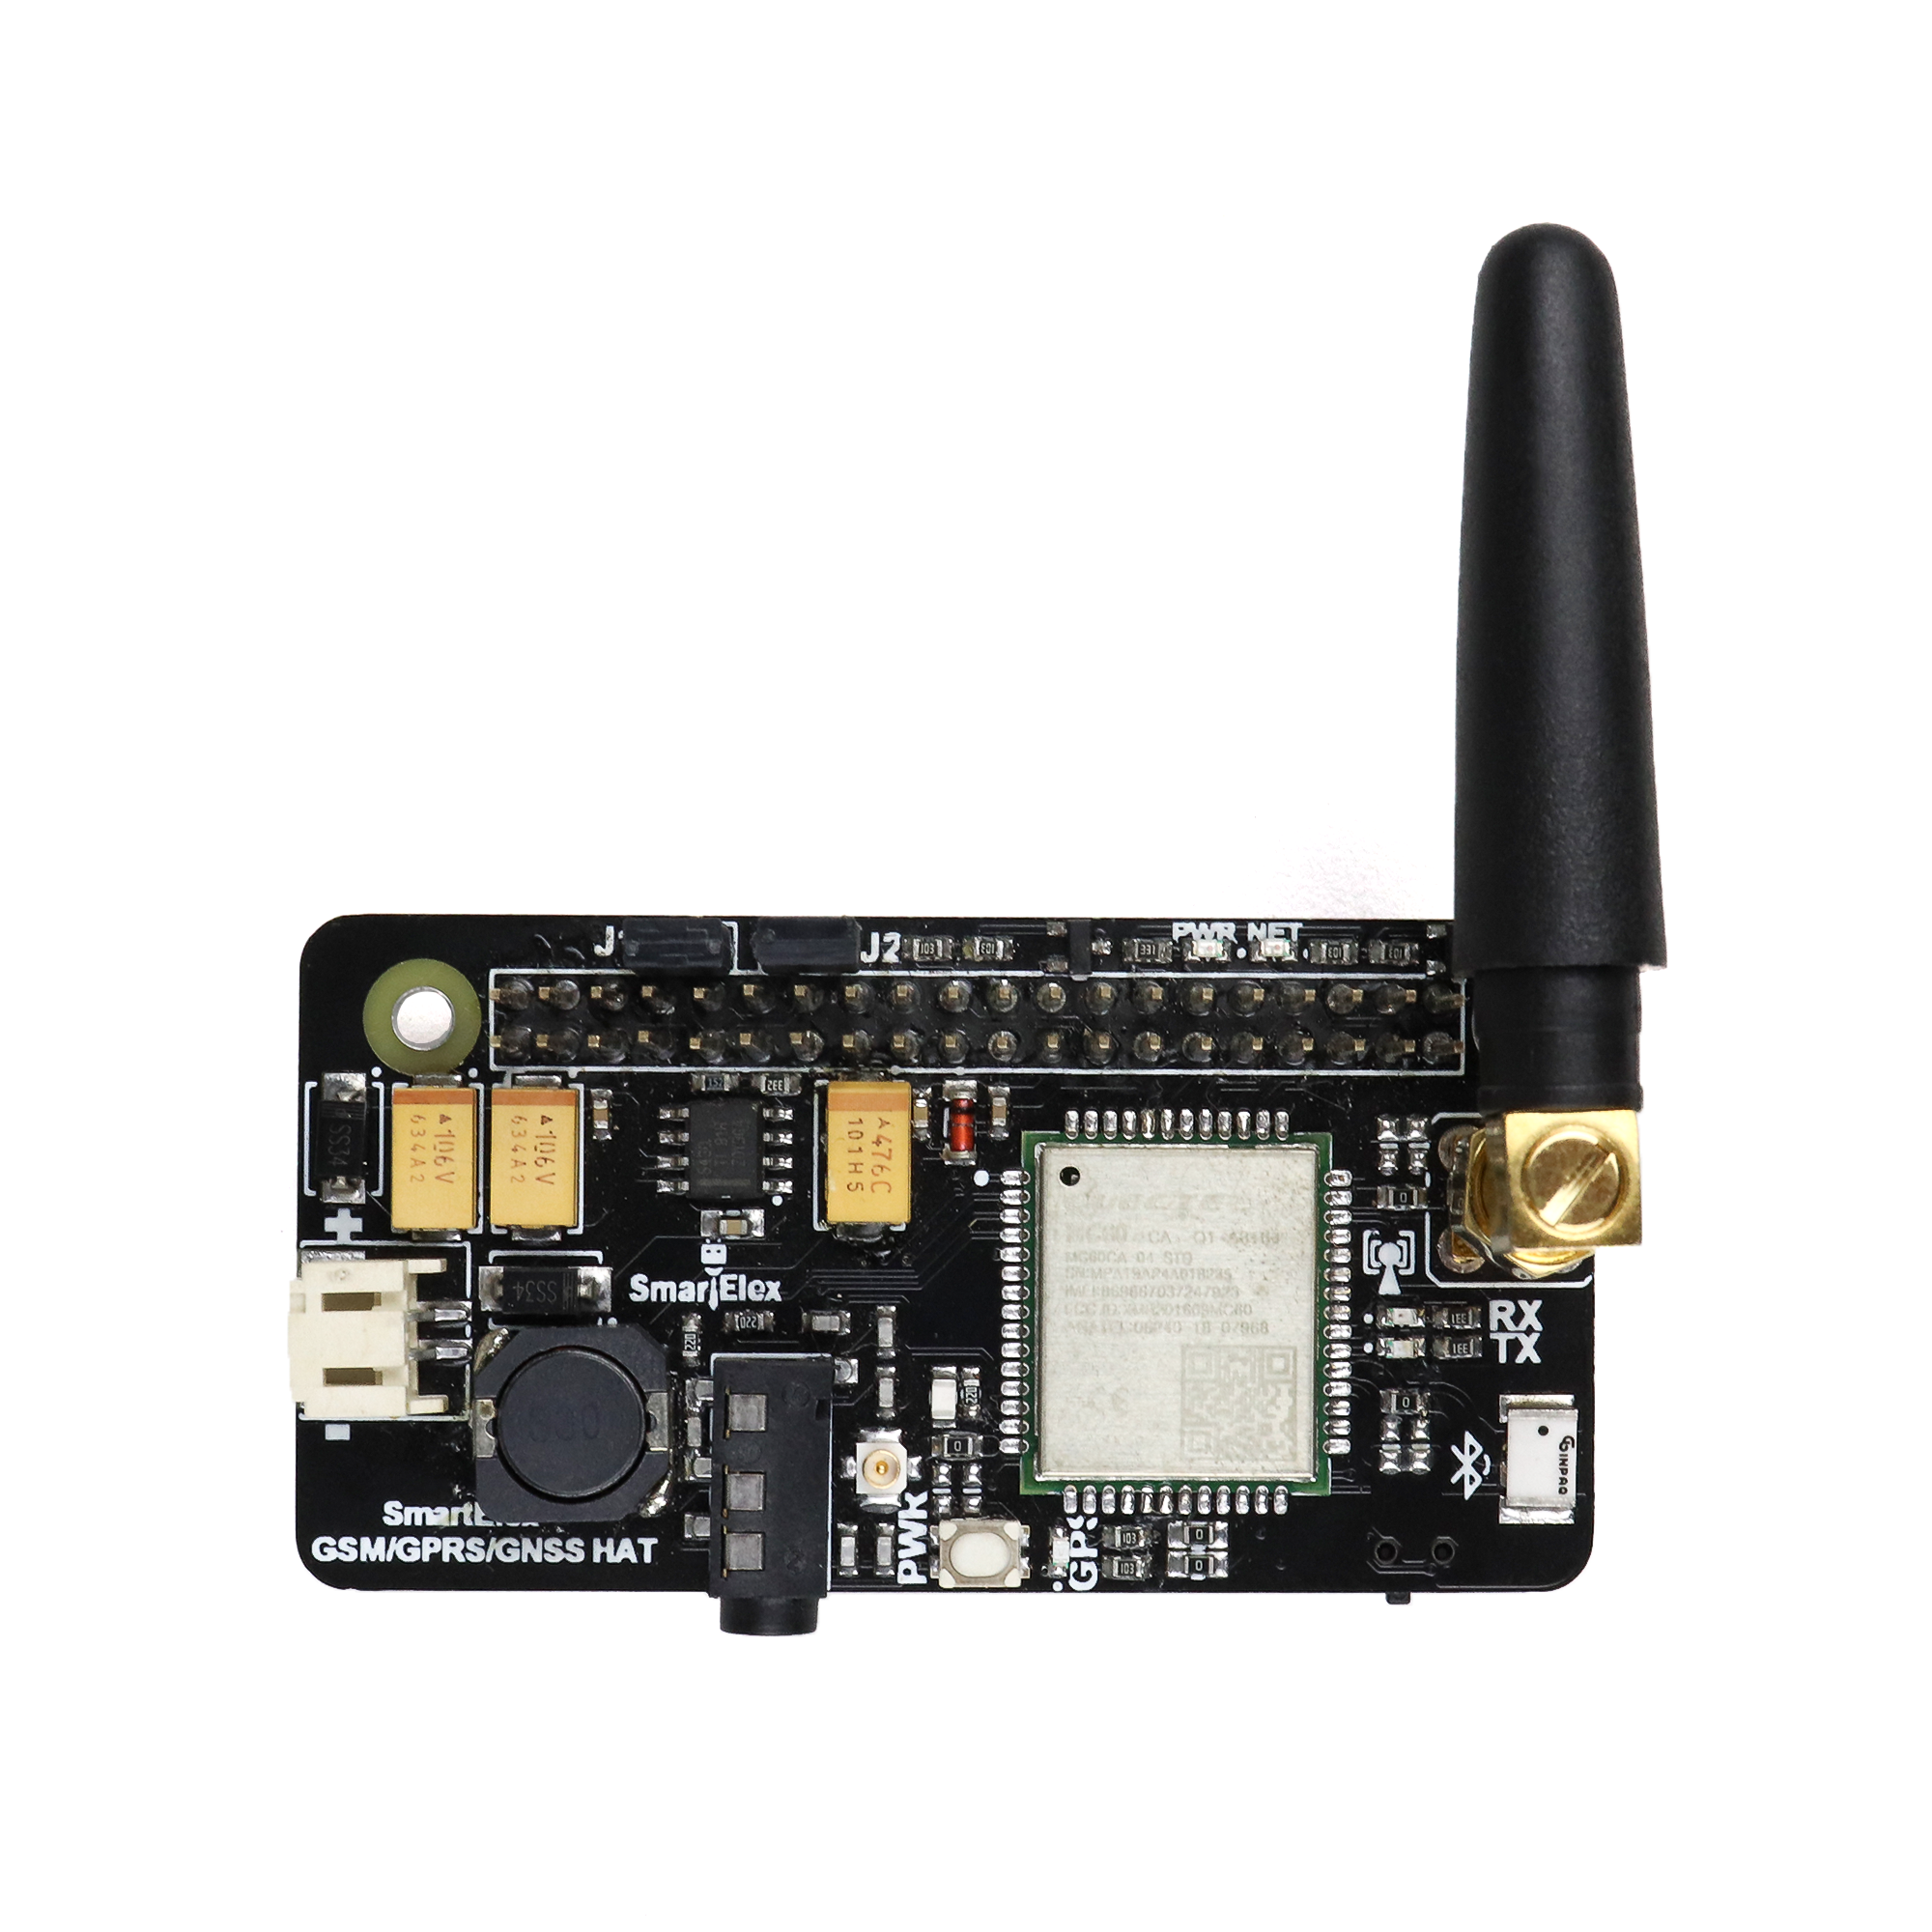 SmartElex GSM/GPRS/GNSS Bluetooth HAT for Raspberry Pi